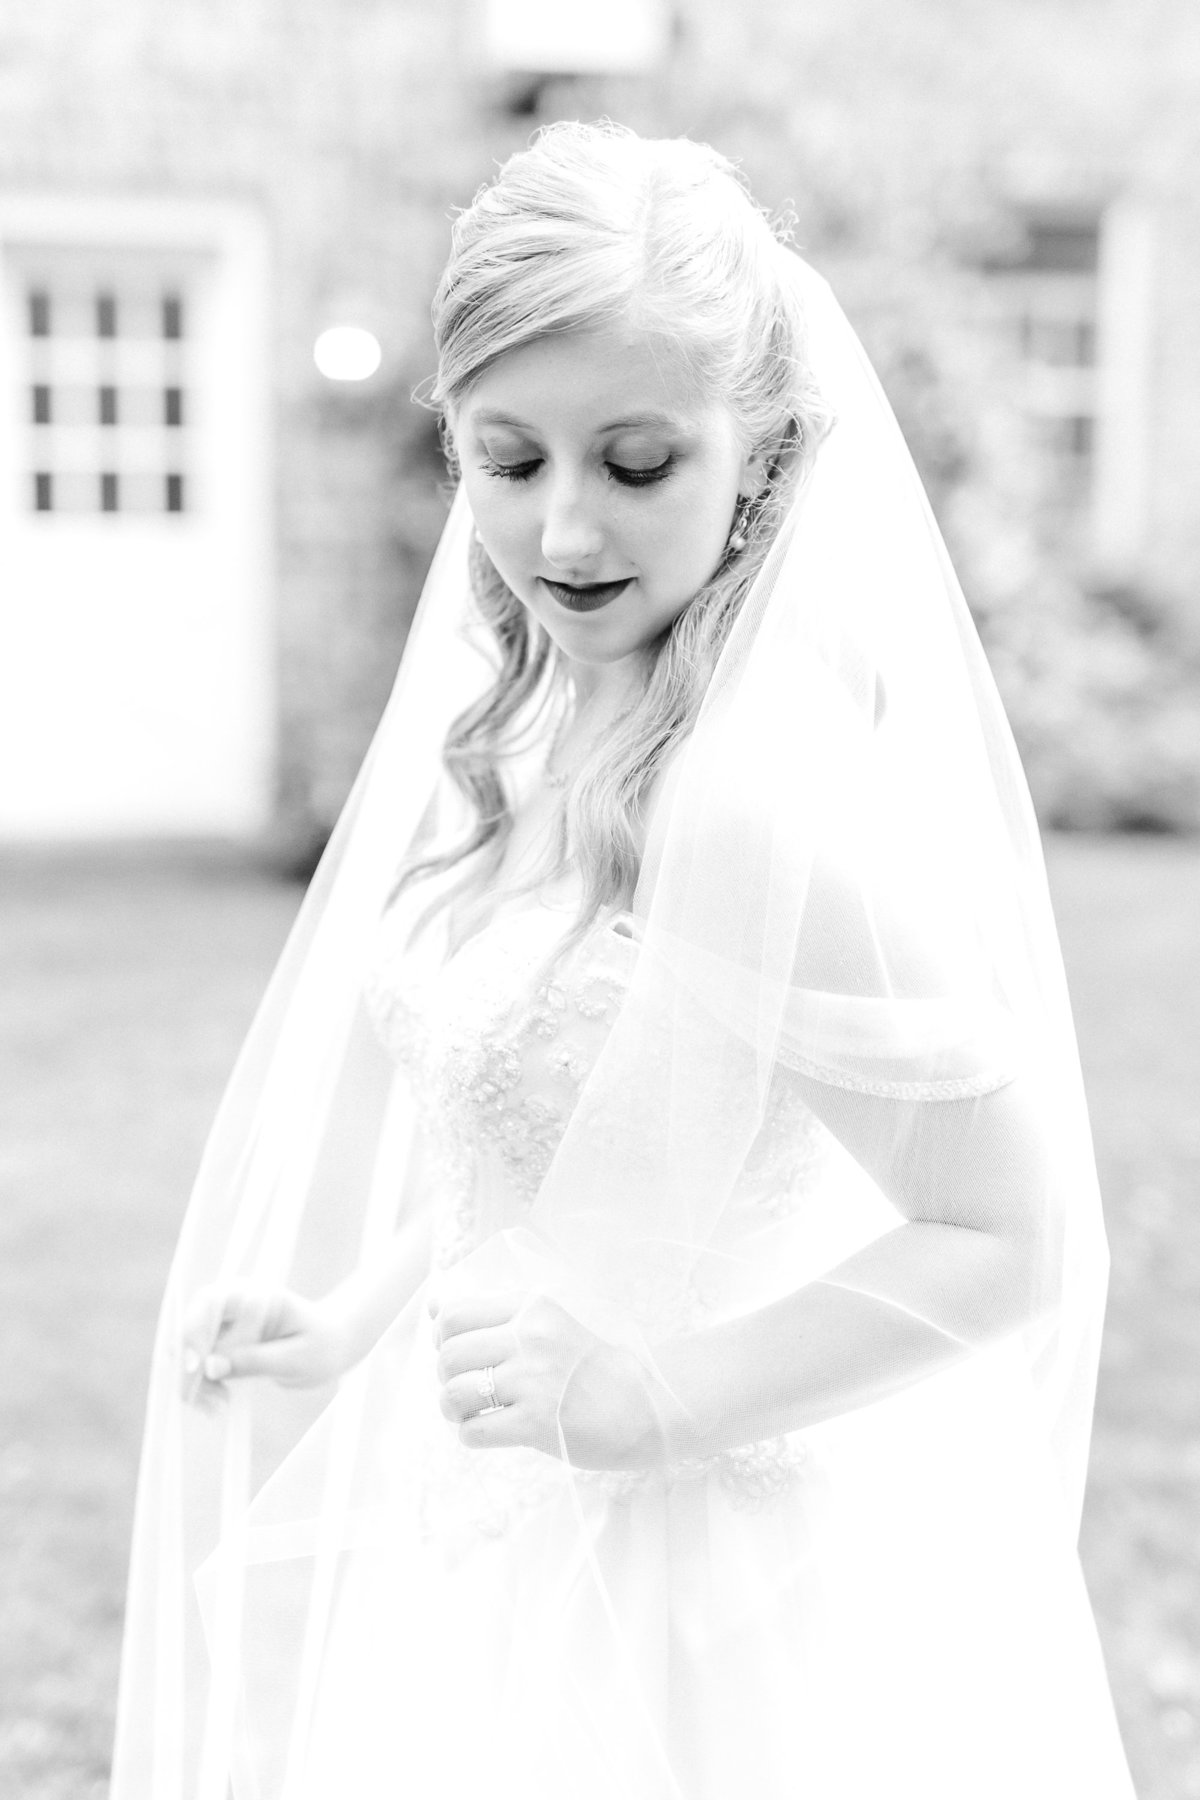 Kevyn_Dixon_Photography_Twickenham_Wedding-1-3